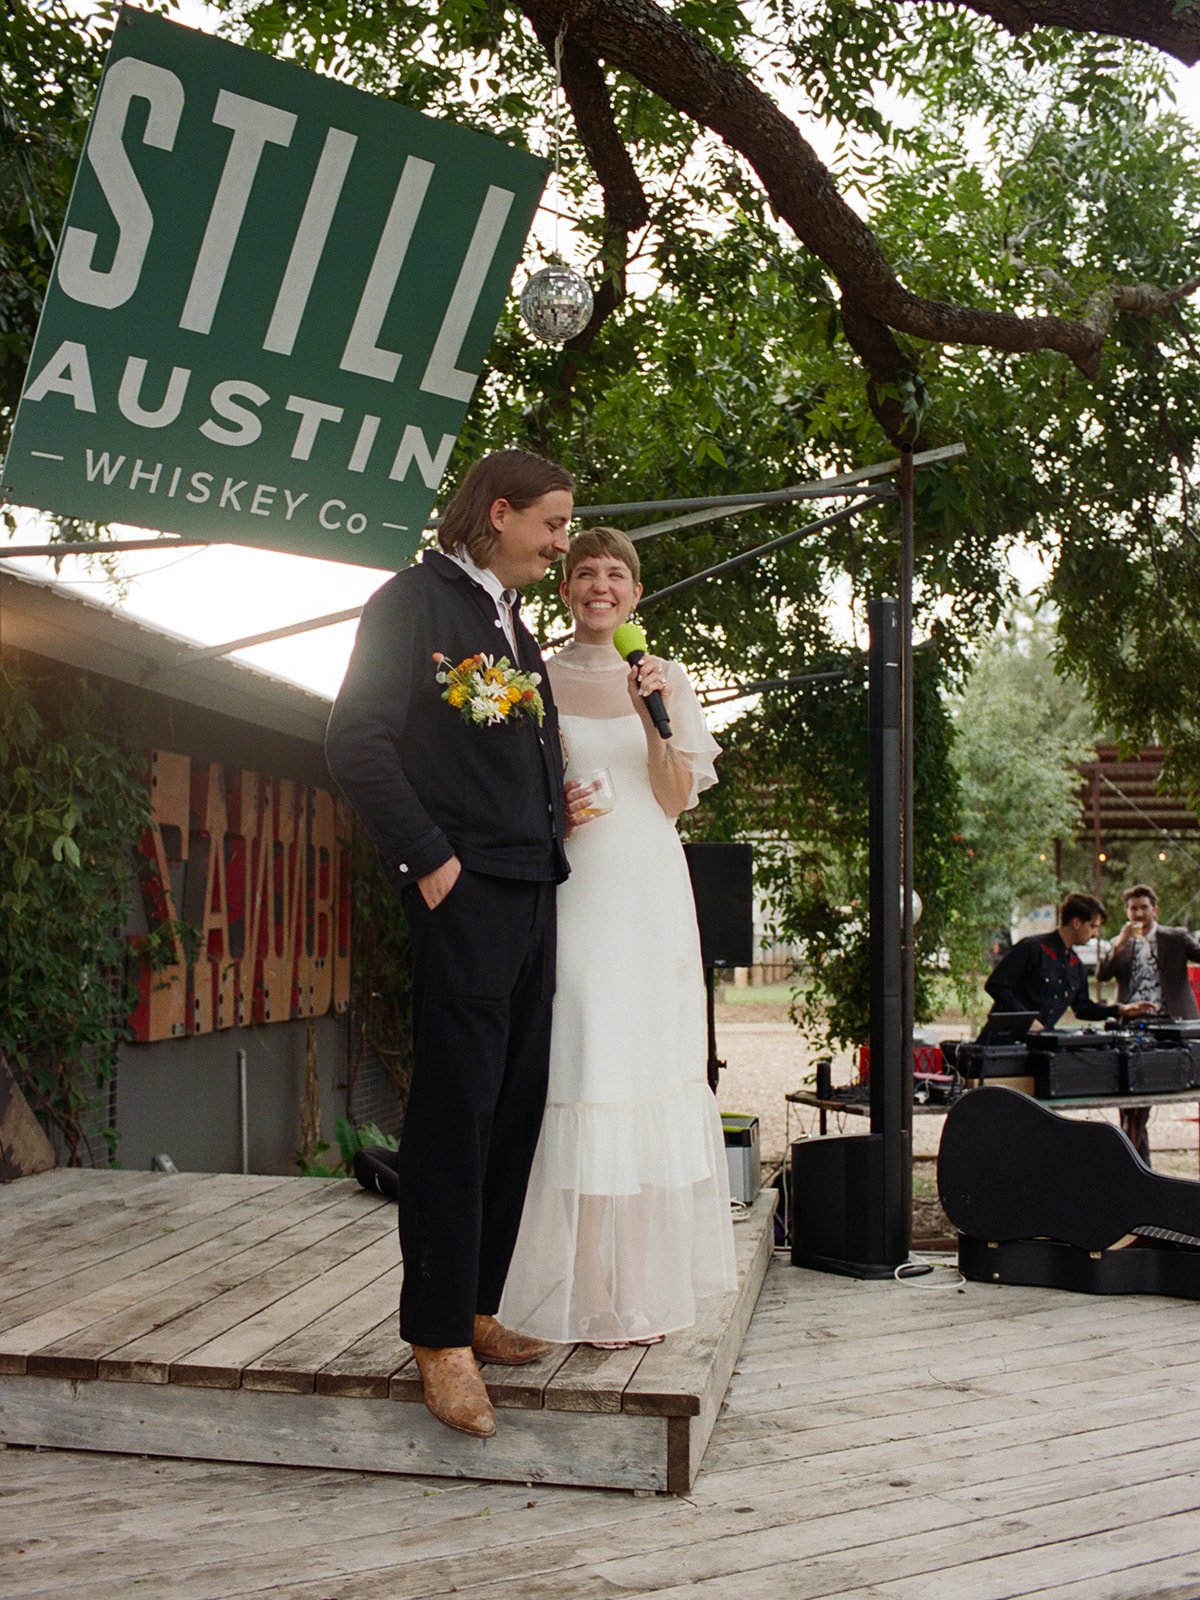 Best-Film-35mm-Austin-Wedding-Photographer-the-Long-time-Super8-118.jpg